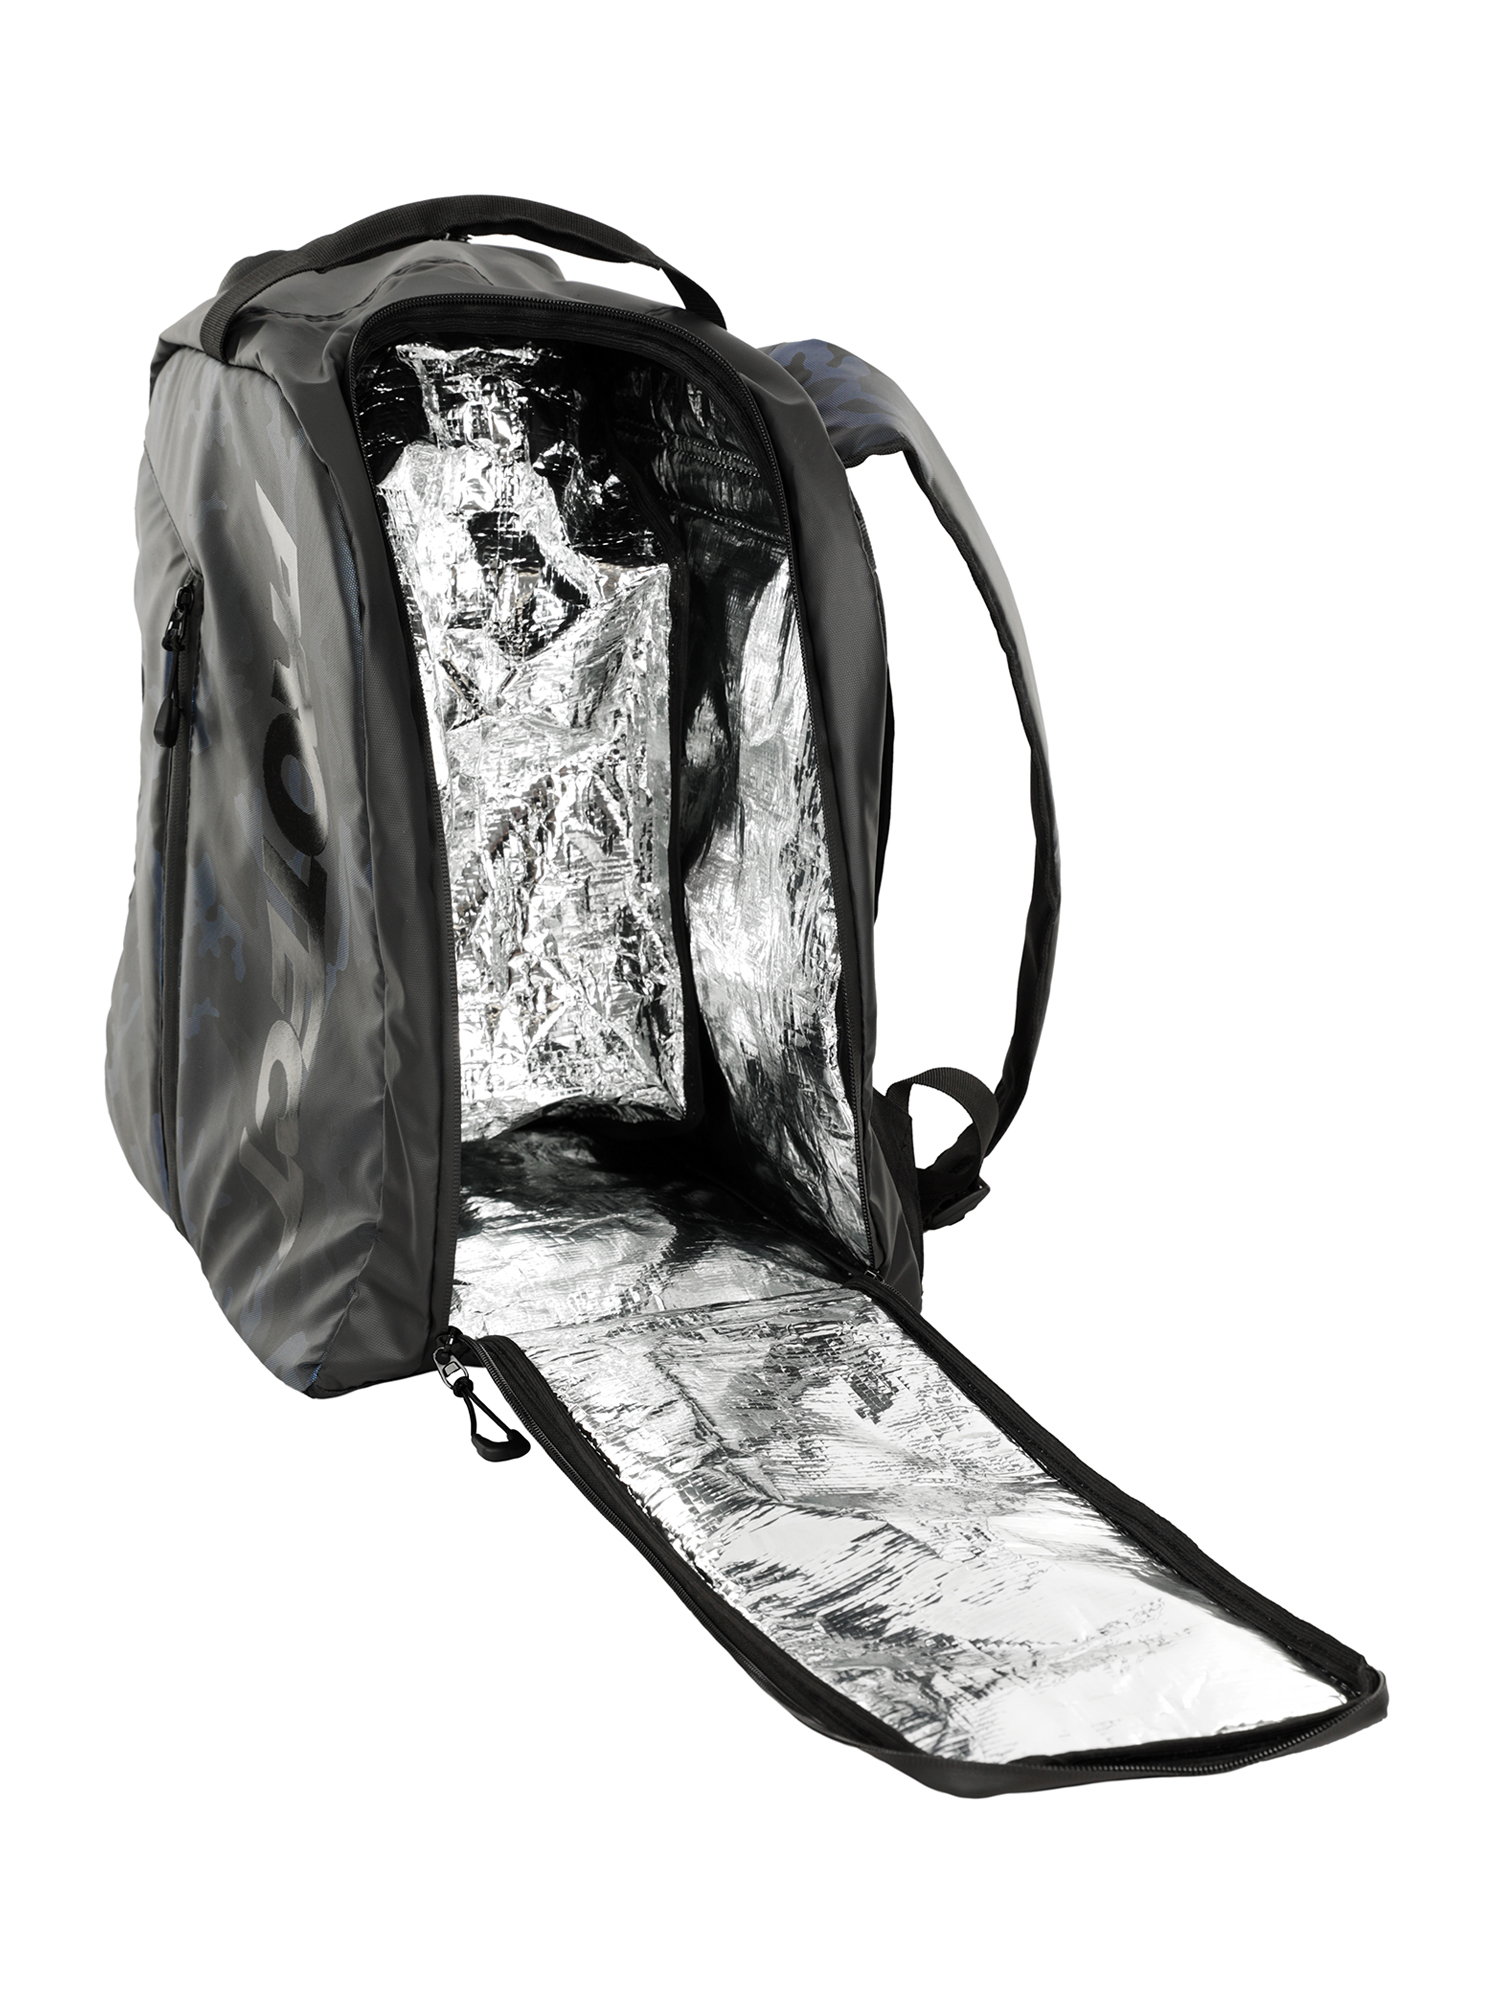 Сумка-рюкзак для ботинок PROTECT горн. лыжи, сноуборд. + шлем + перчатки, цвет принт, -р 36х40х26 см